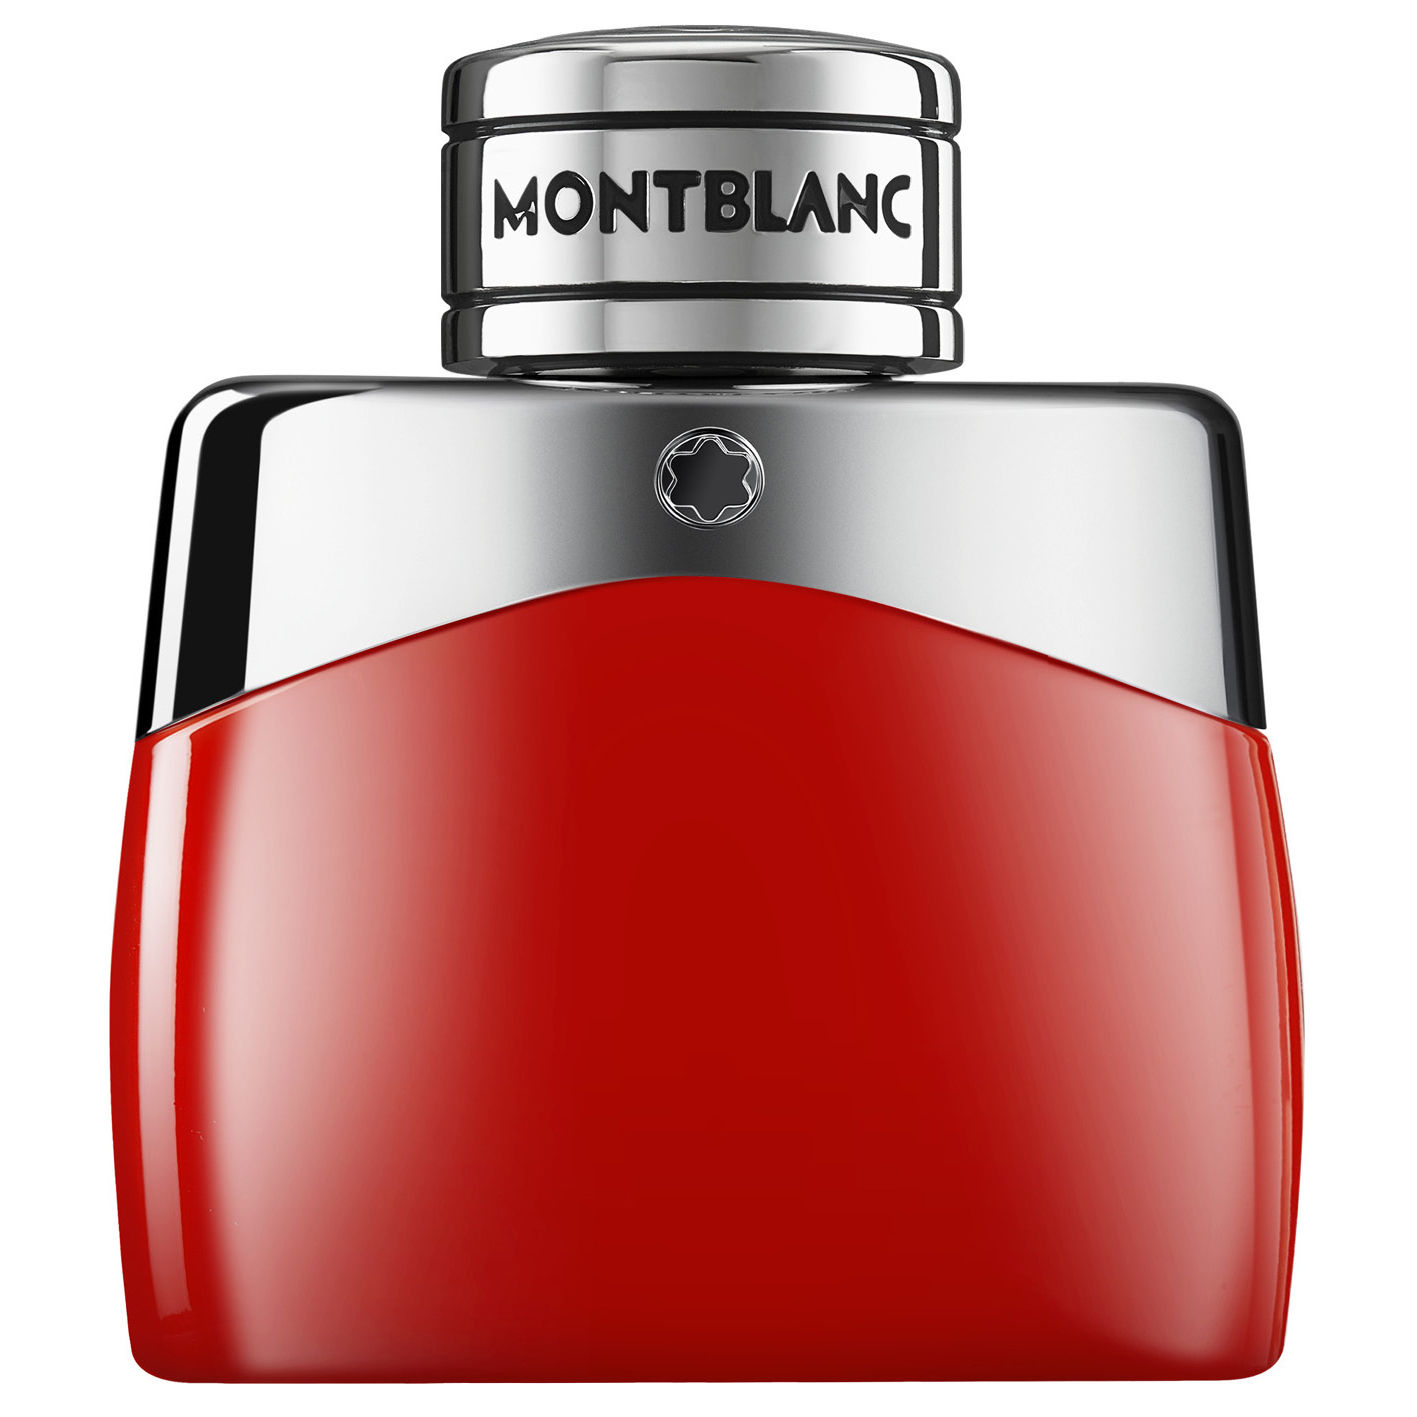 Montblanc Legend Red Eau de parfum spray 30 ml